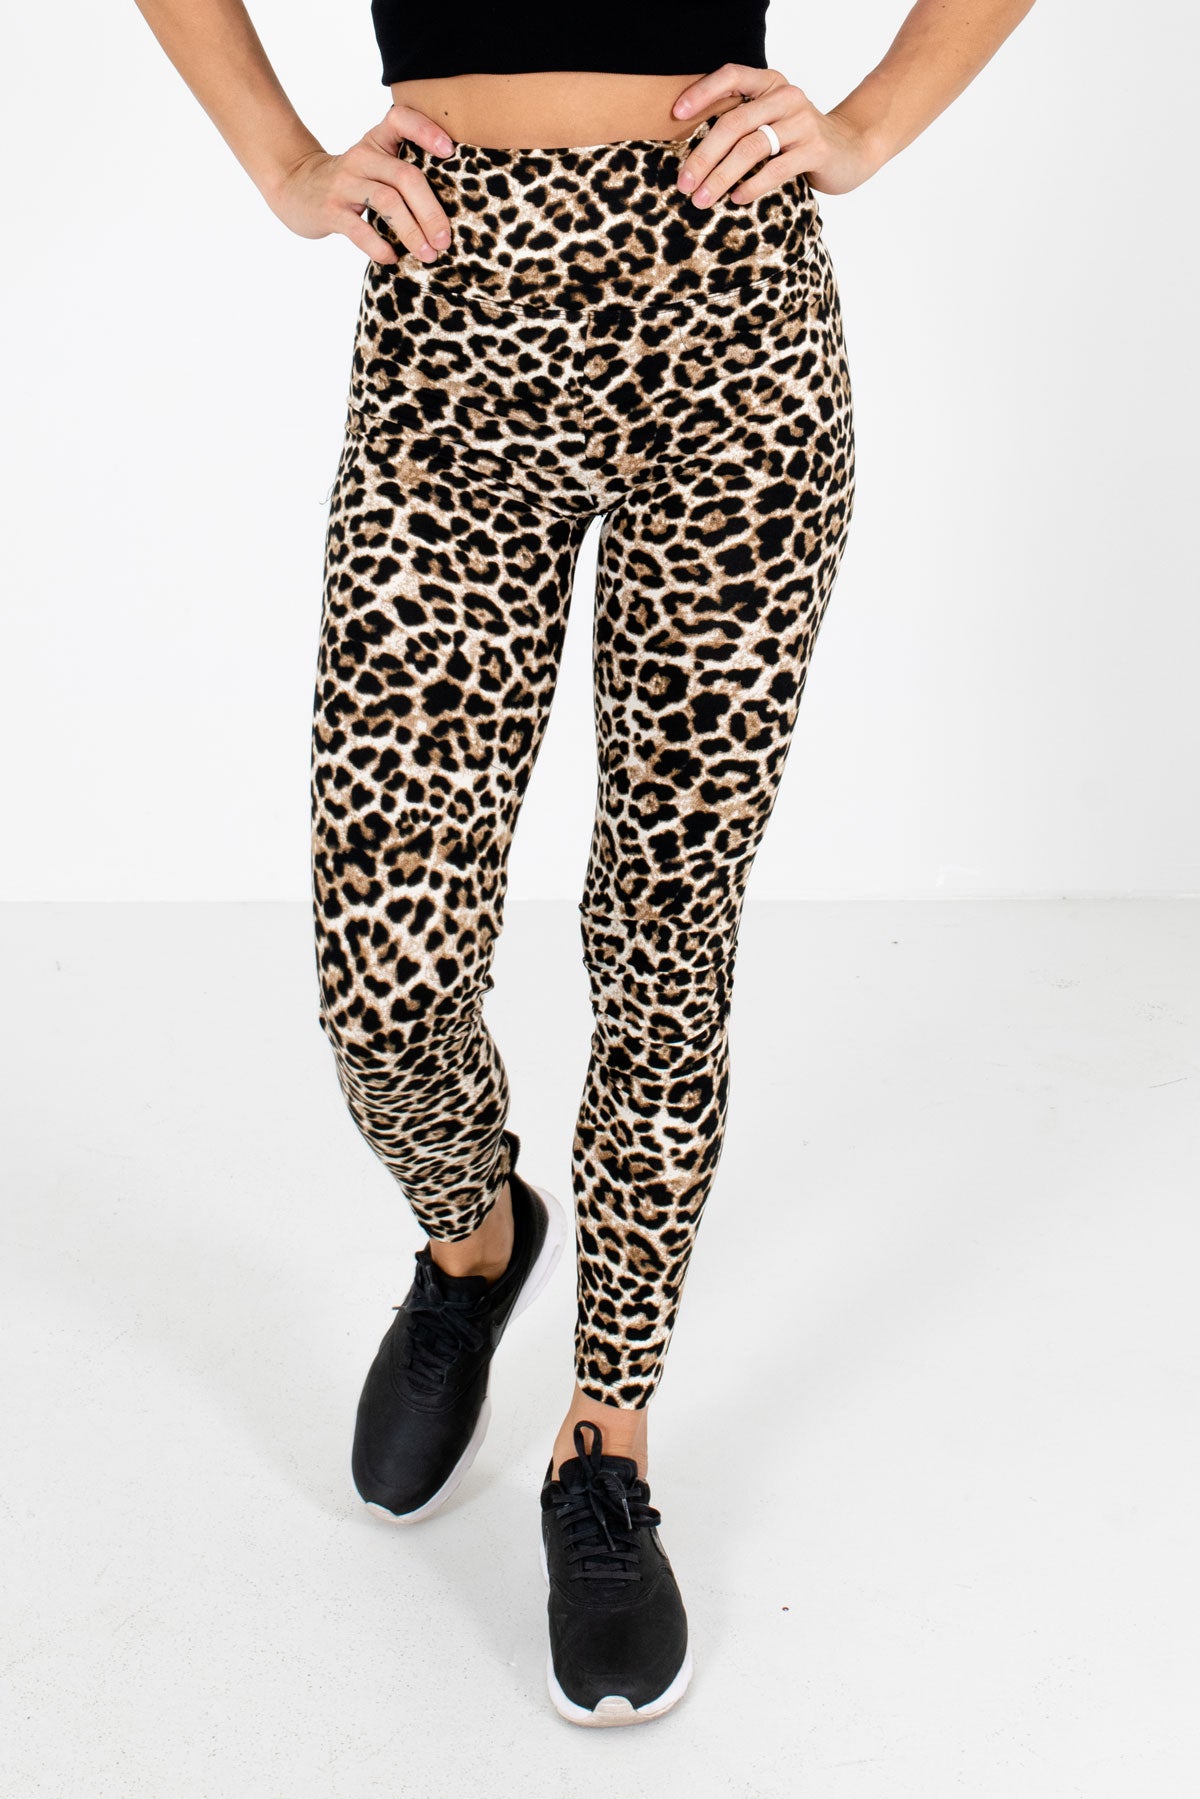 Beige Leopard Print Cute and Comfortable Boutique Active Leggings for Women